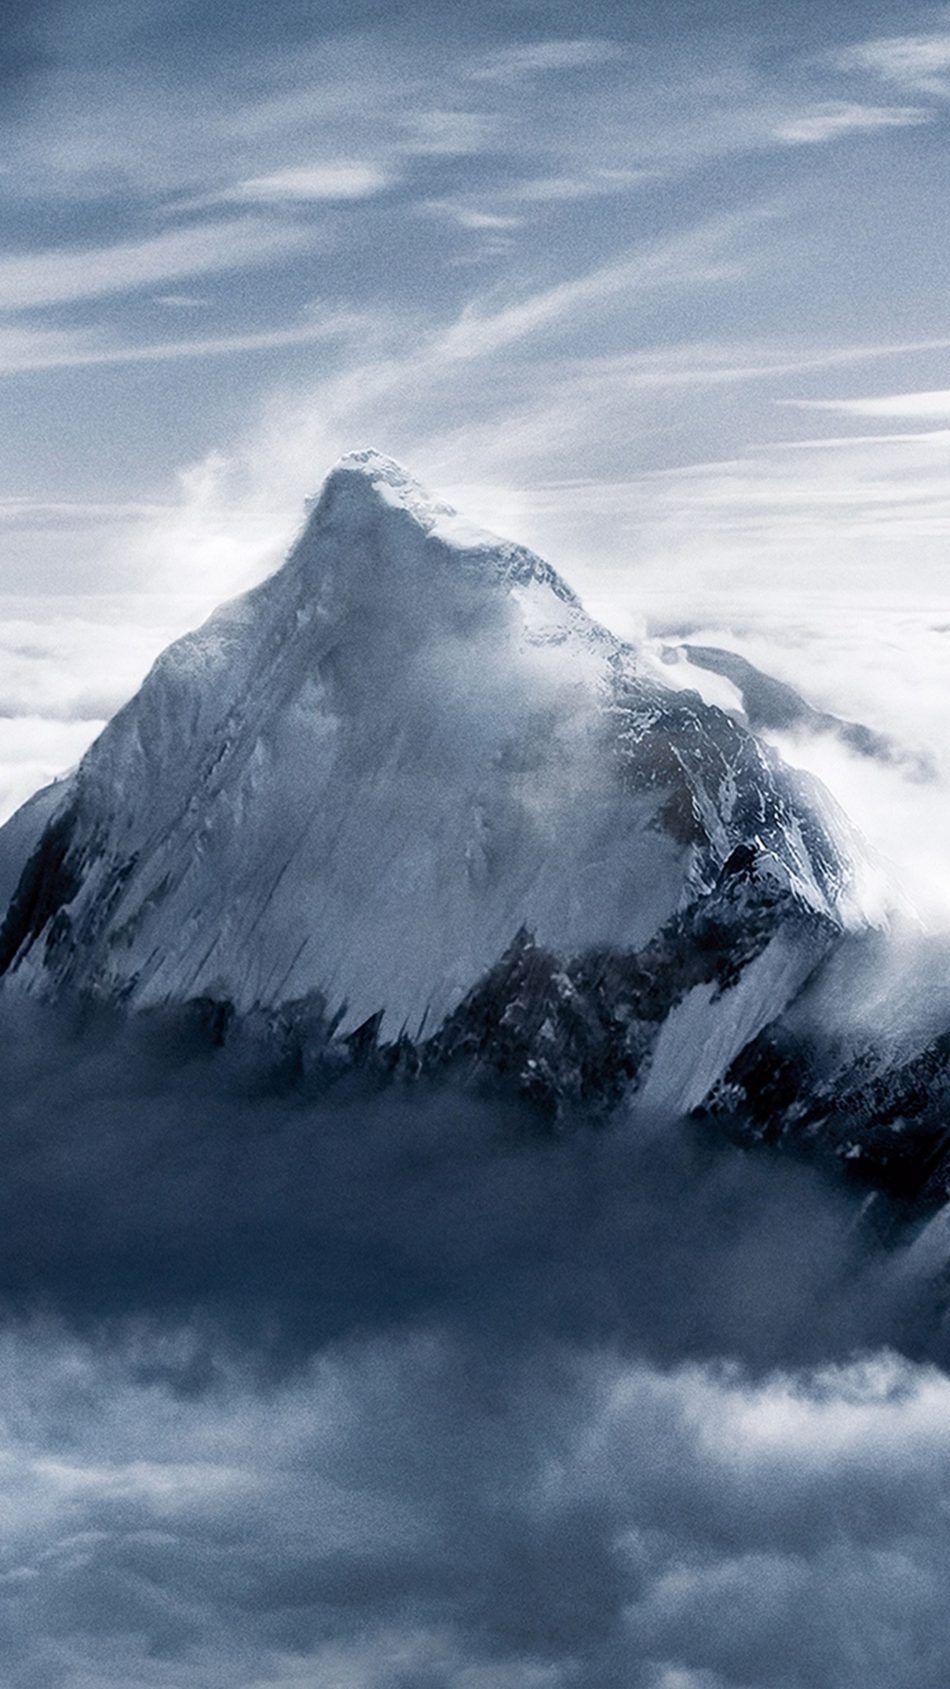 Stunning Mount Everest 4K Ultra HD Mobile Wallpaper. iPhone wallpaper scenery, Nature wallpaper, Best nature wallpaper